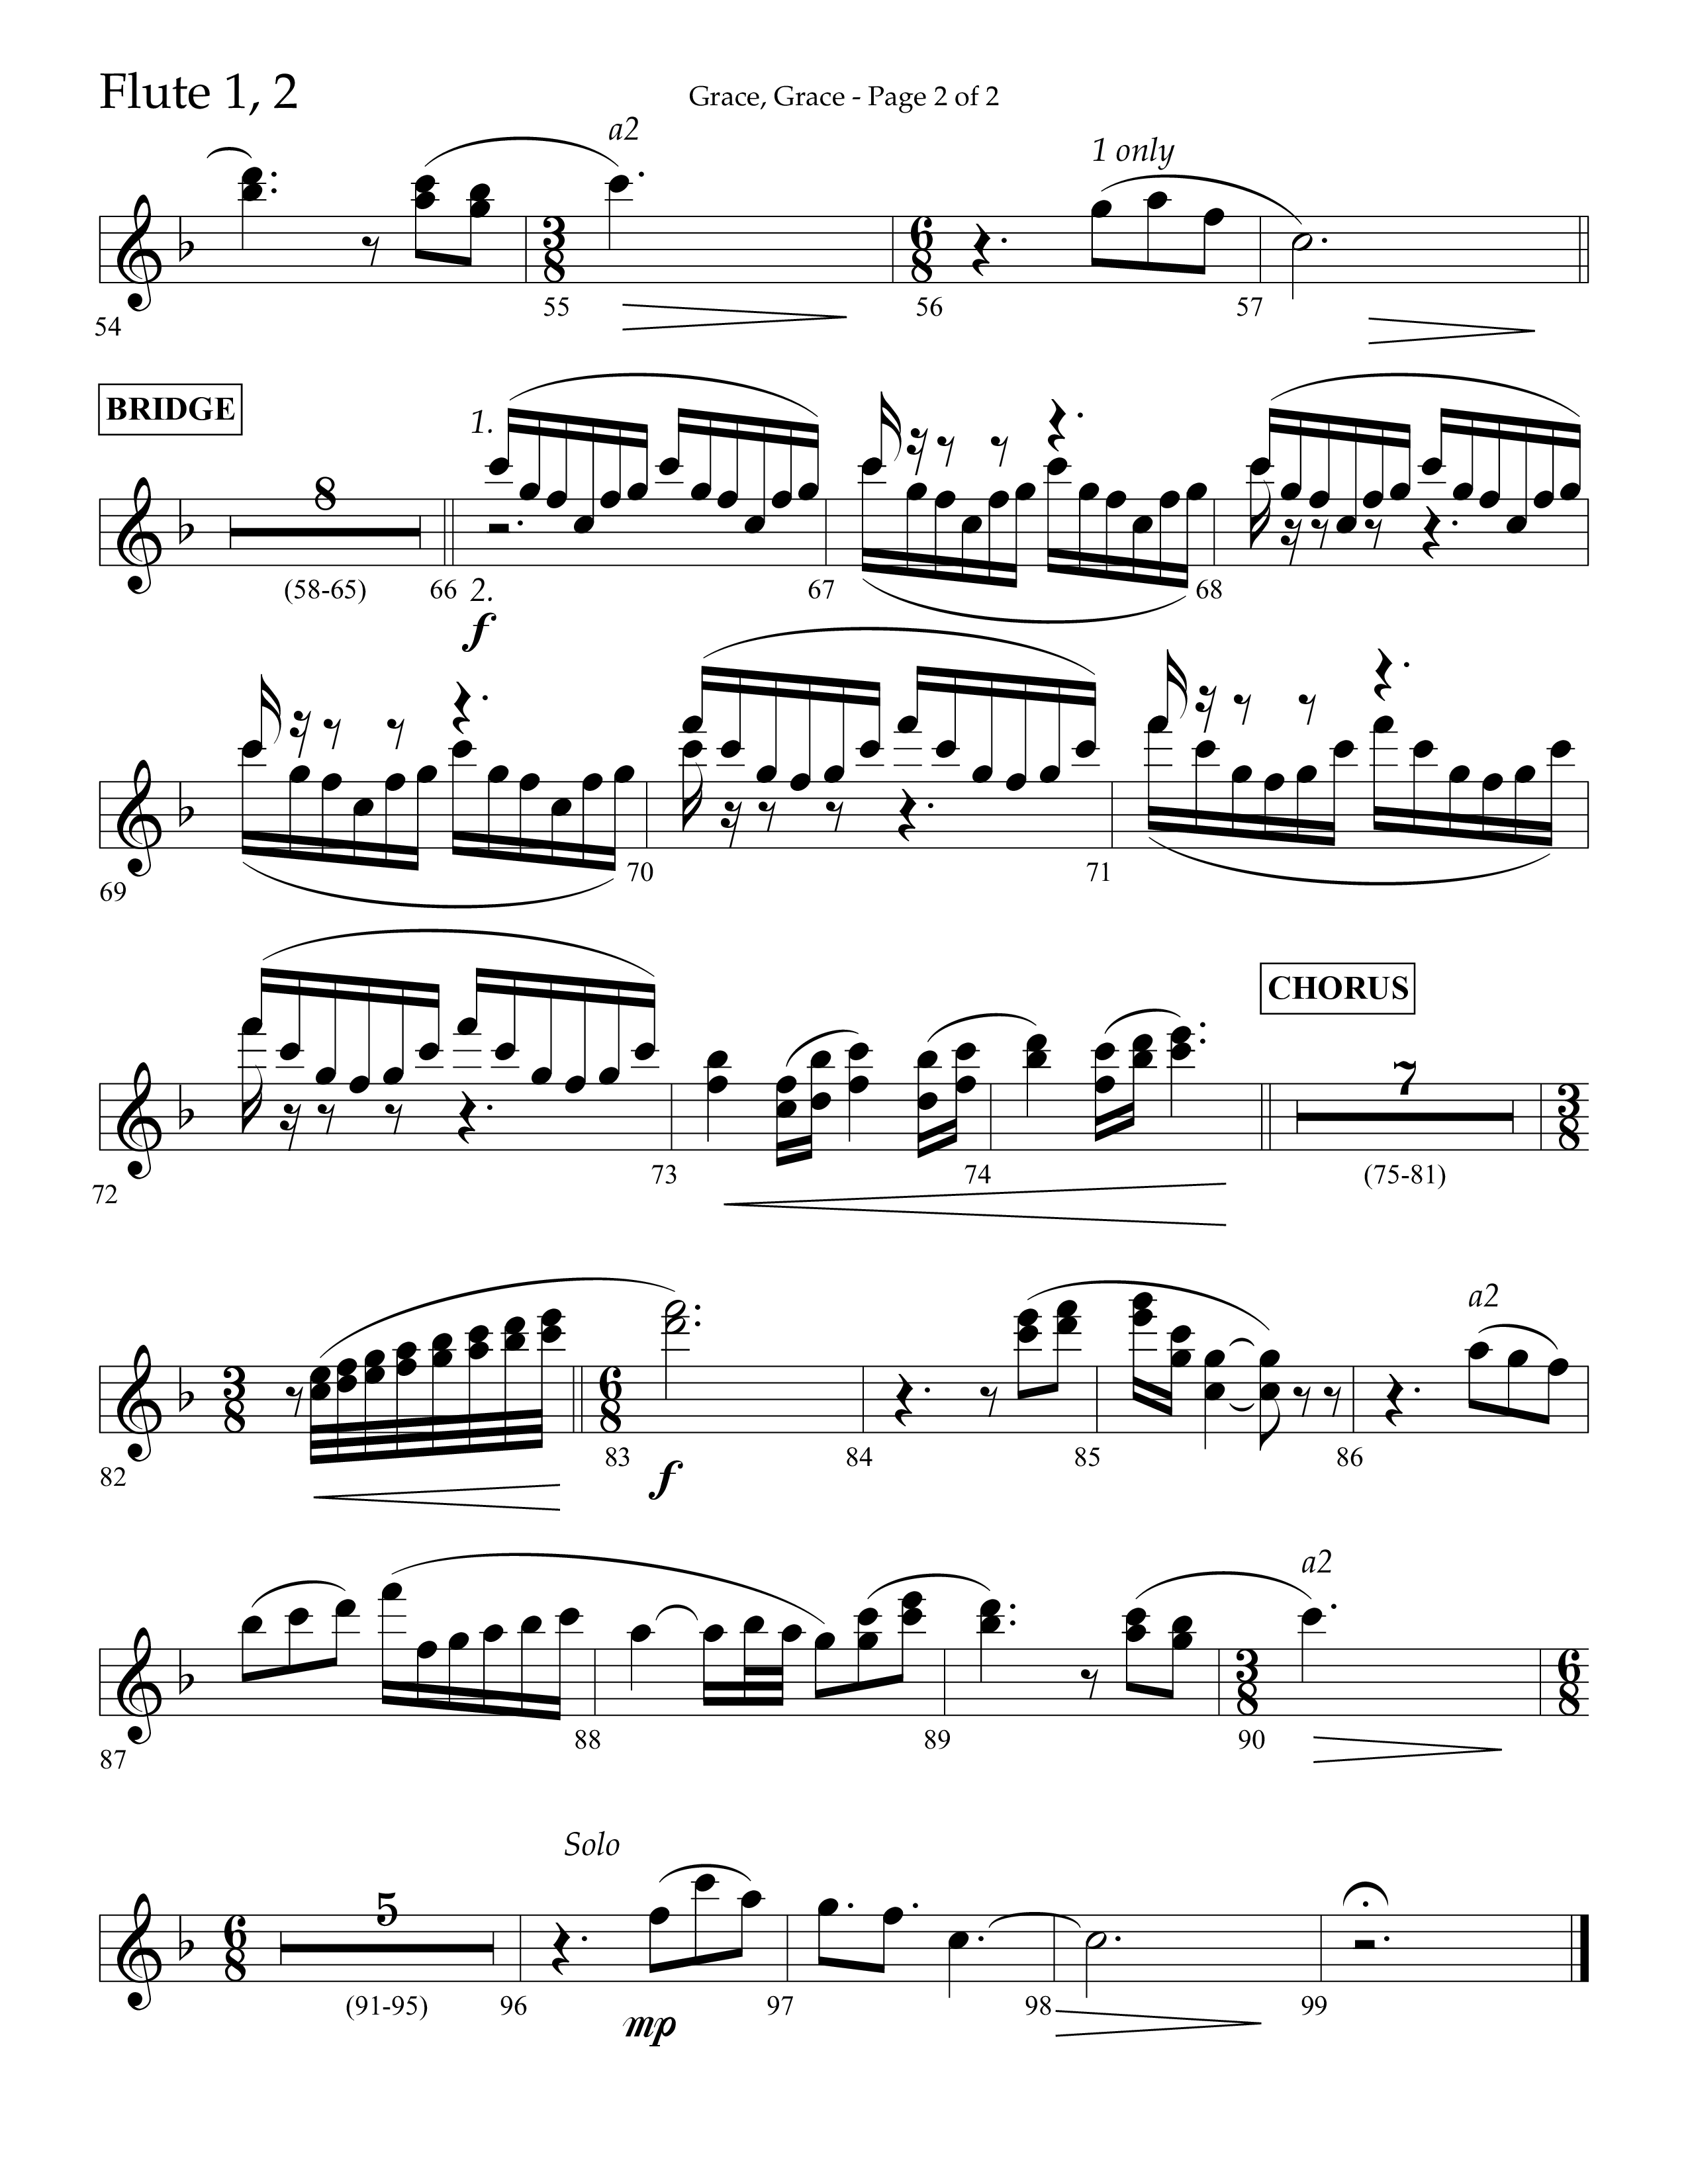 Grace Grace (Choral Anthem SATB) Flute 1/2 (Lifeway Choral / Arr. John Bolin / Arr. Don Koch / Arr. Eric Belvin / Orch. Daniel Semsen)